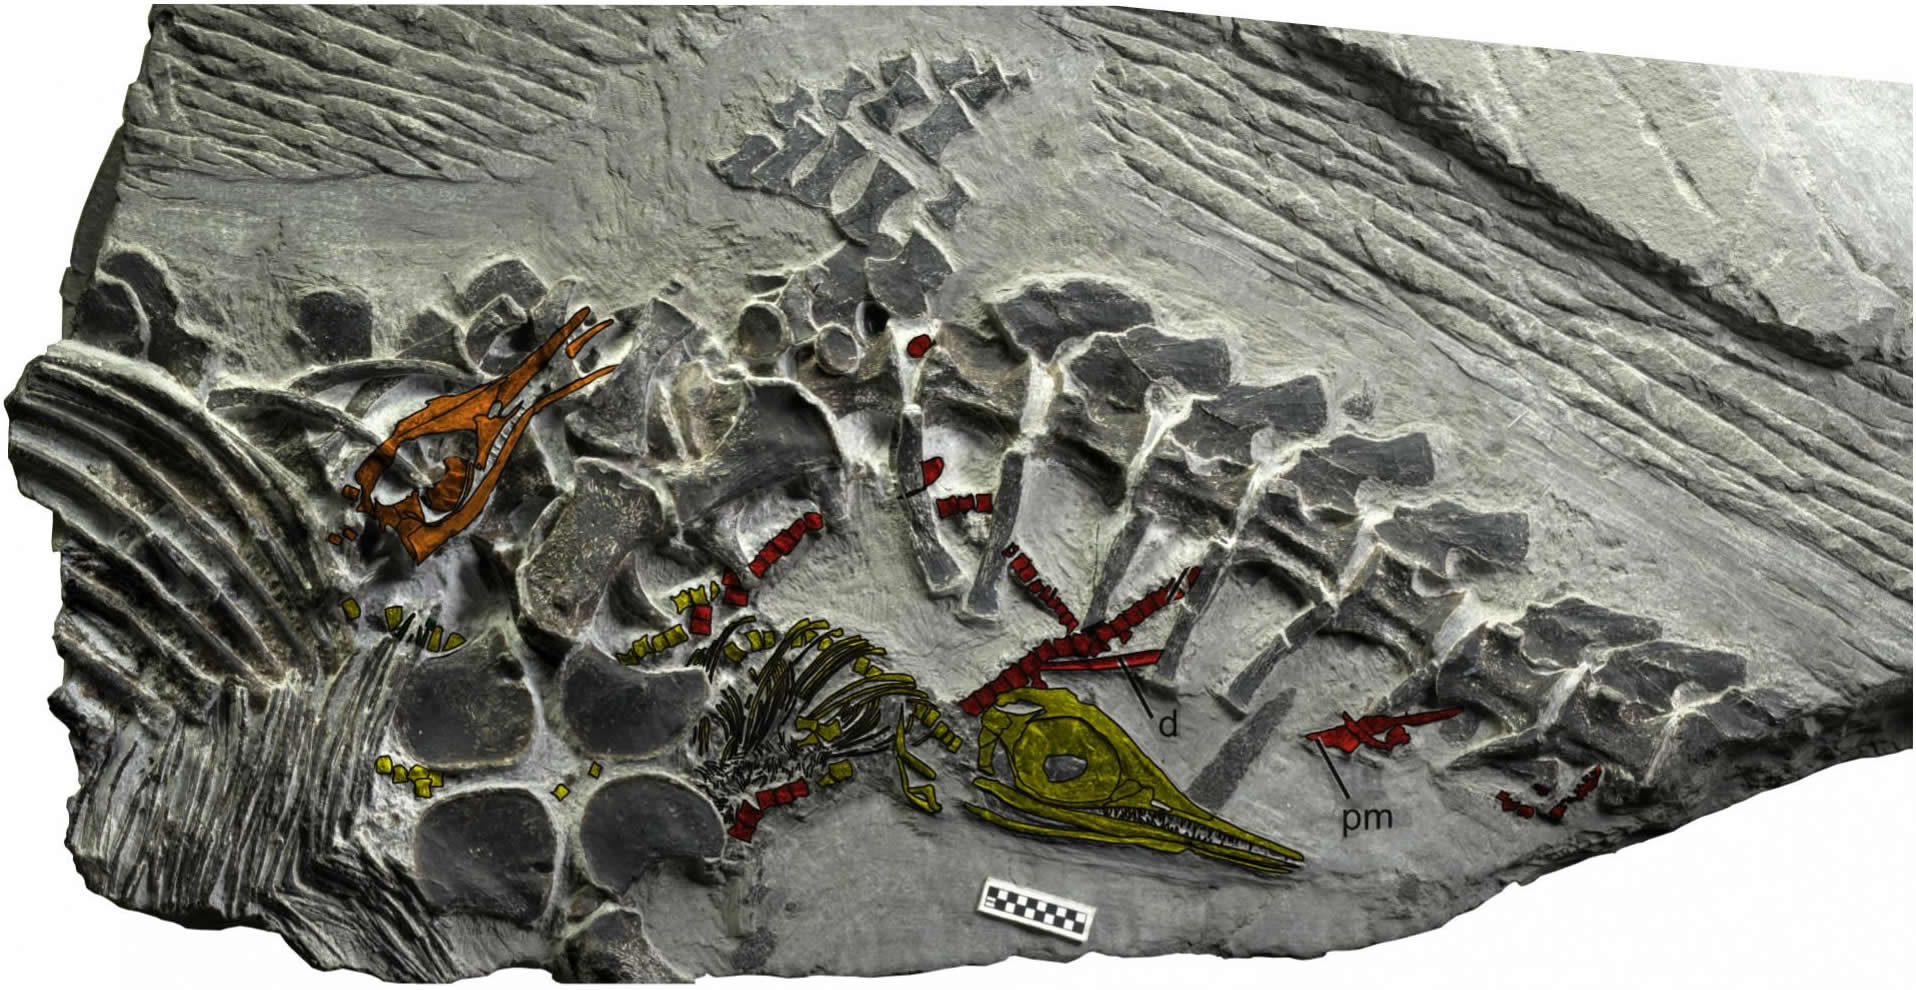 Ichthyosaur fossil captures oldest reptile live birth.